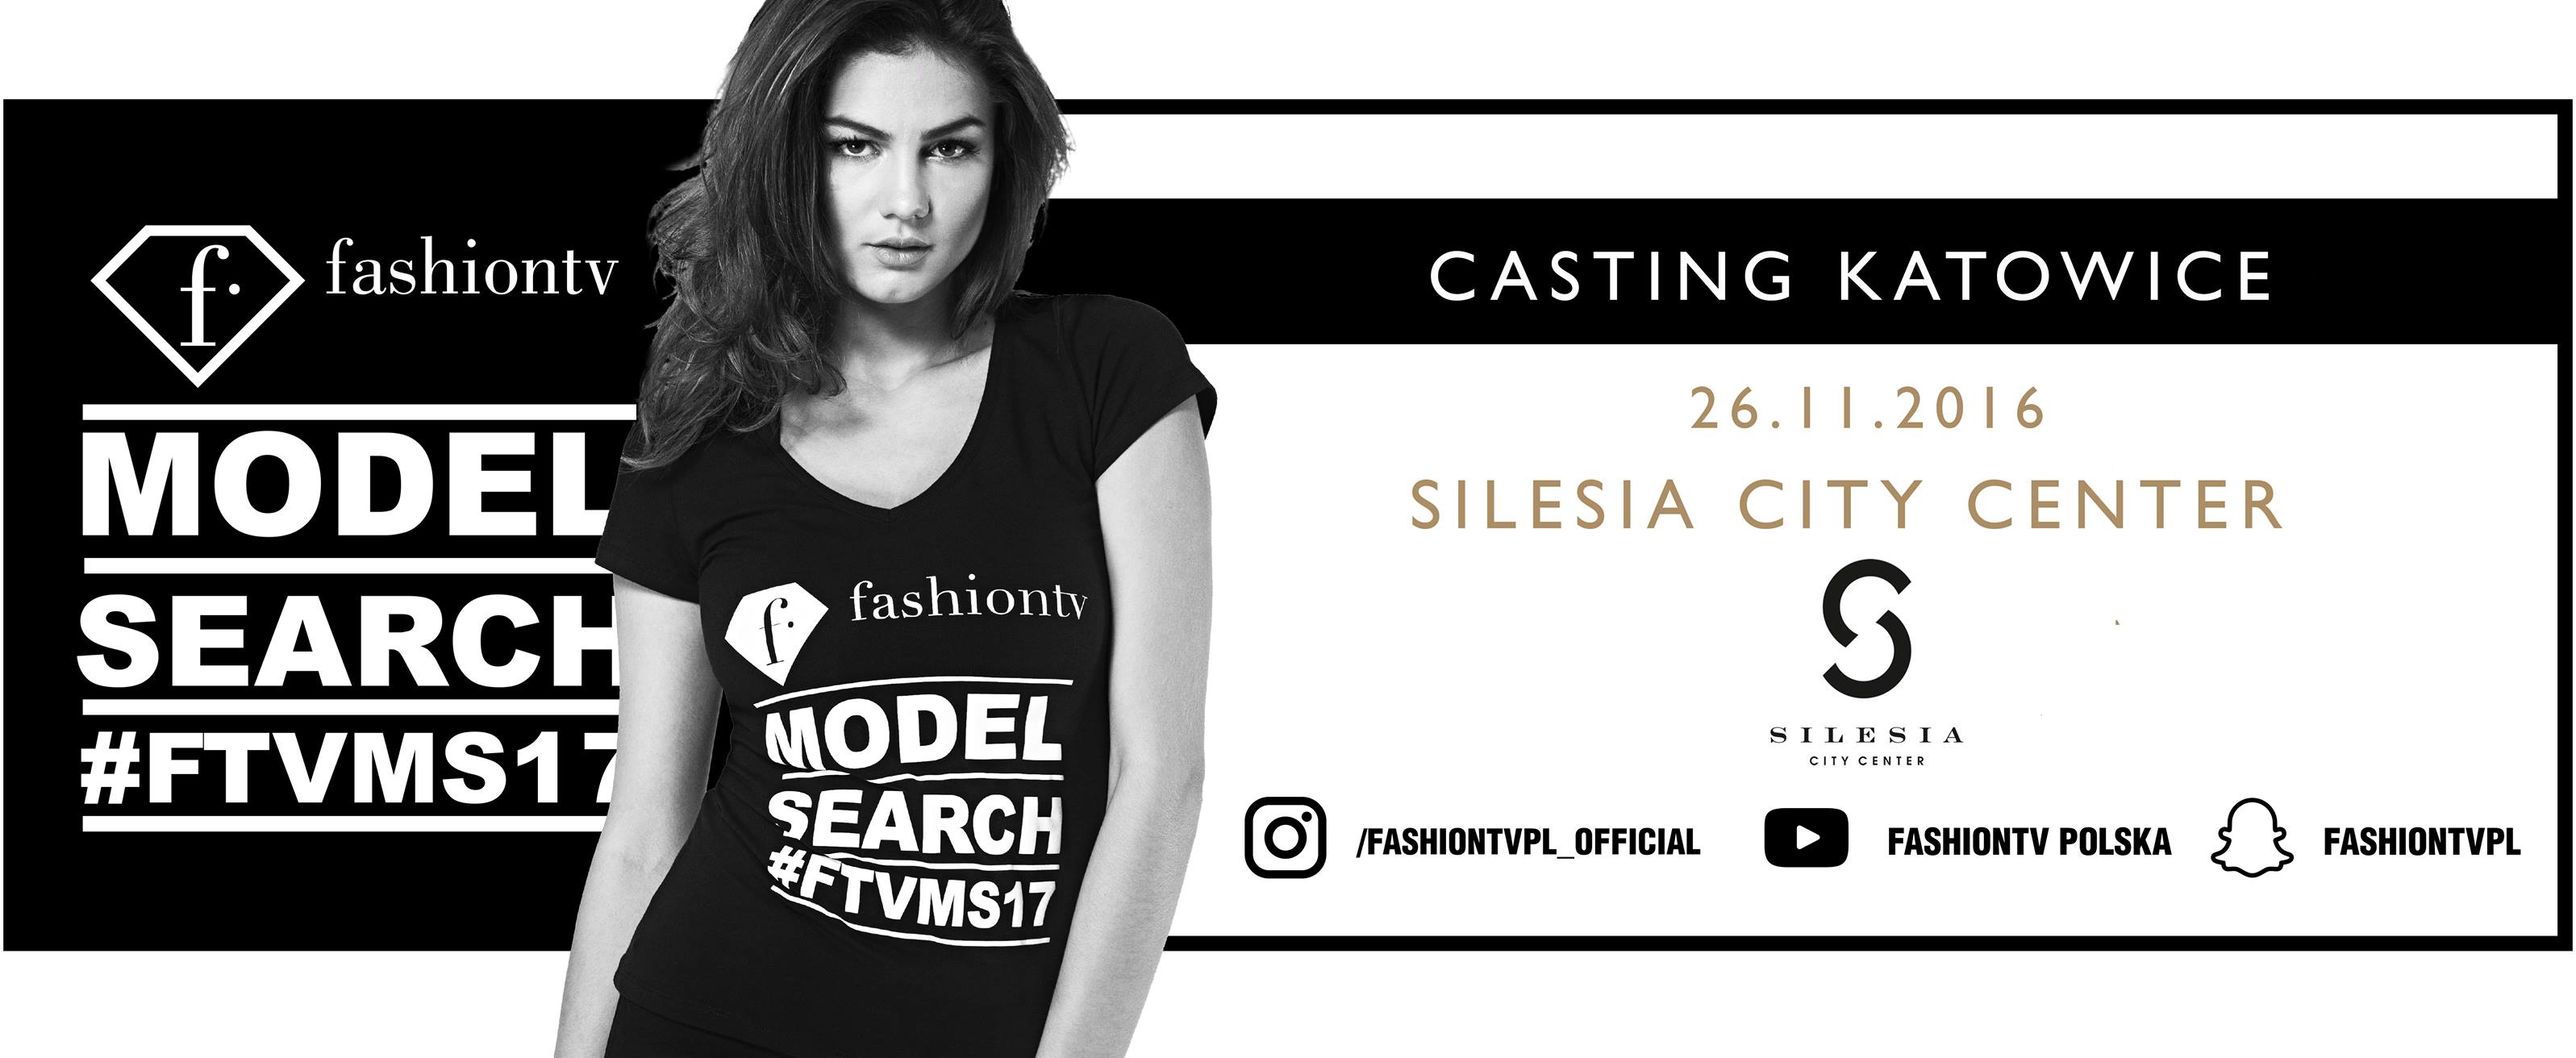 Kolejny casting FashionTV Model Search 2017 w Silesia City Center